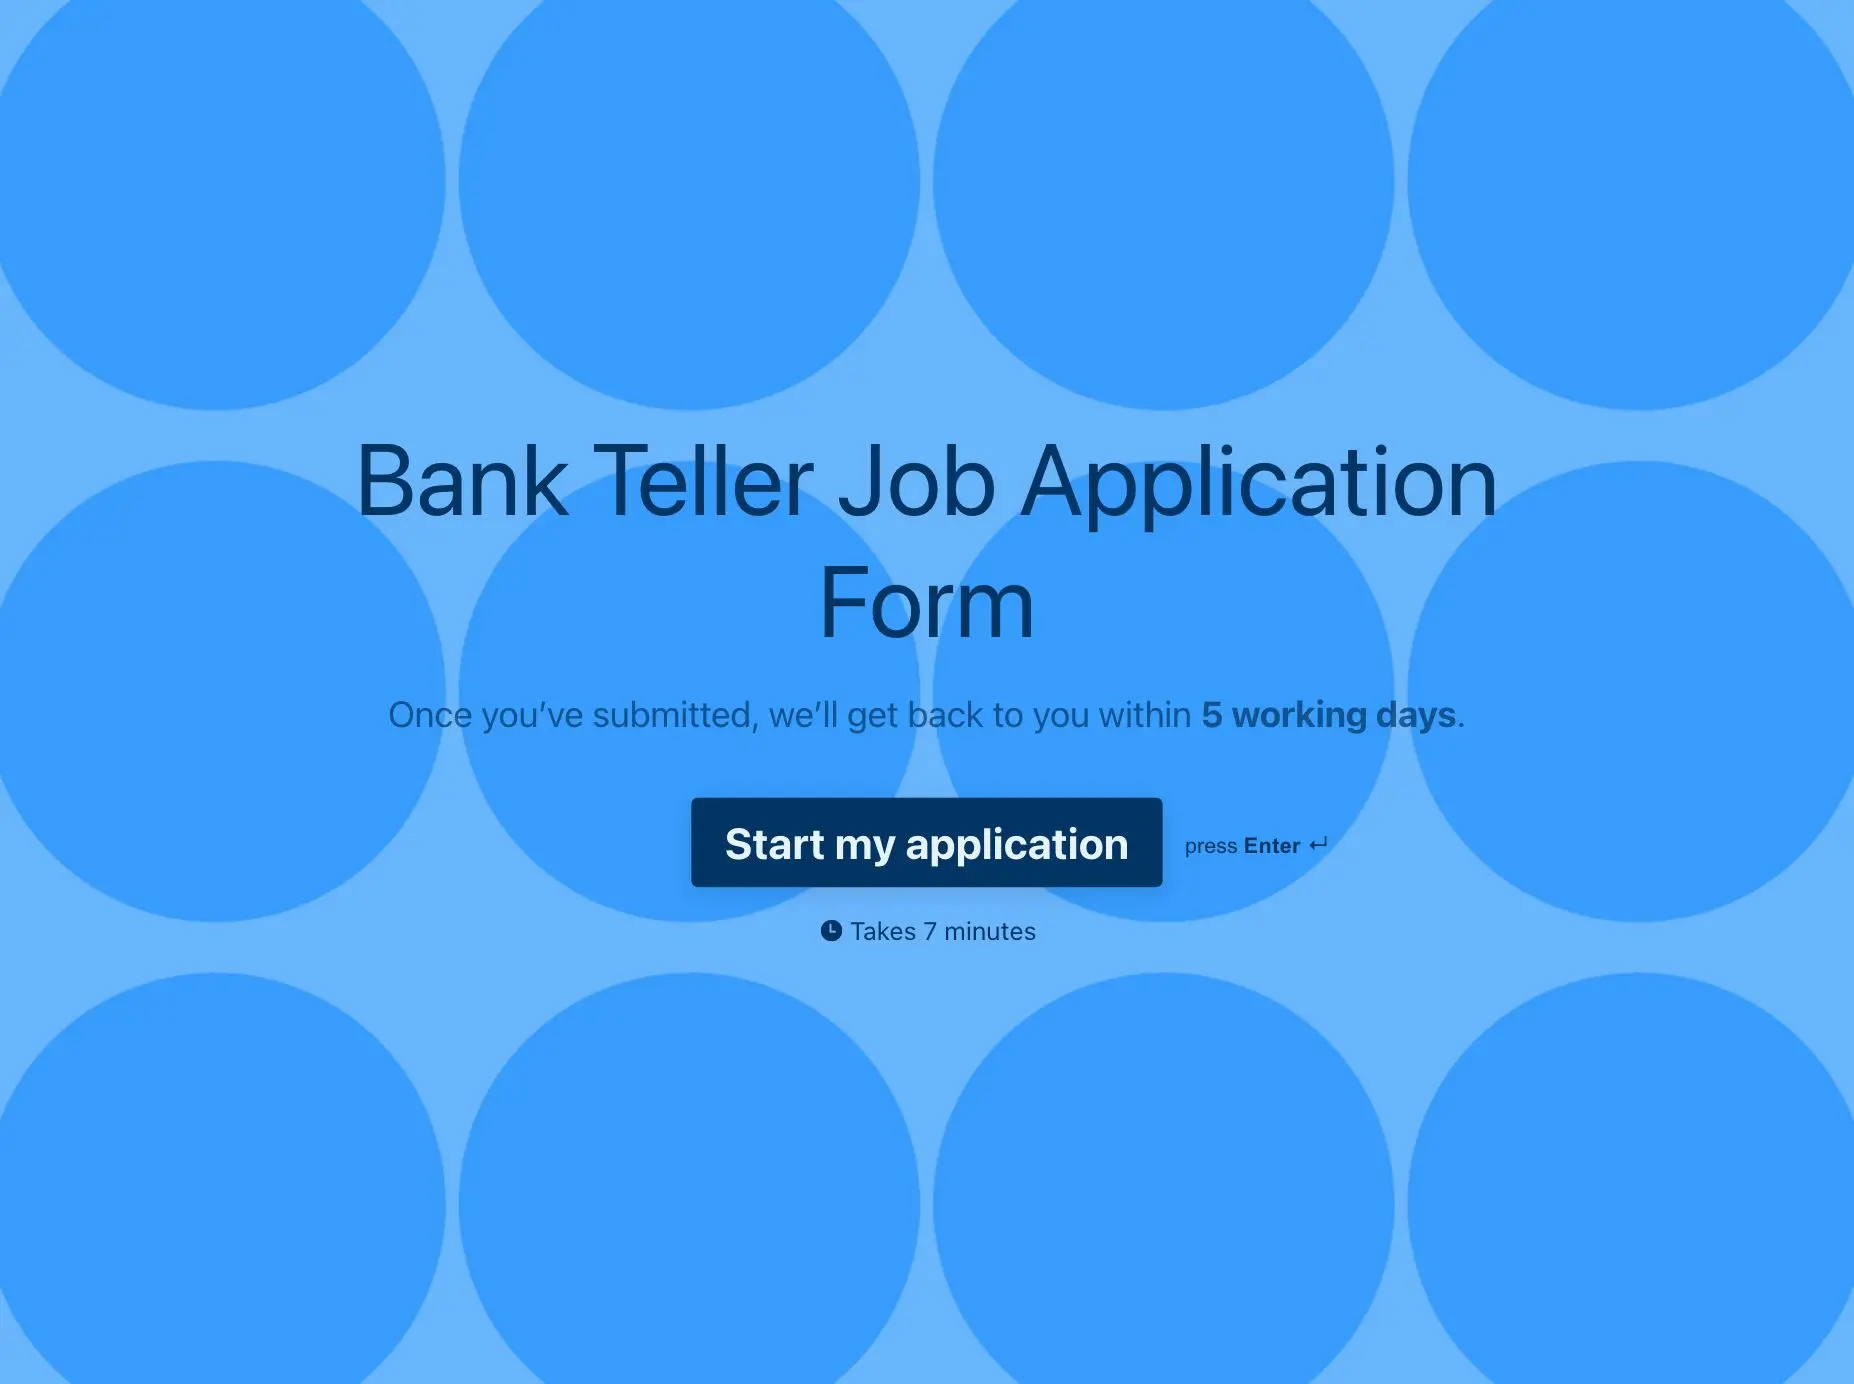 Bank Teller Job Application Form Template Hero